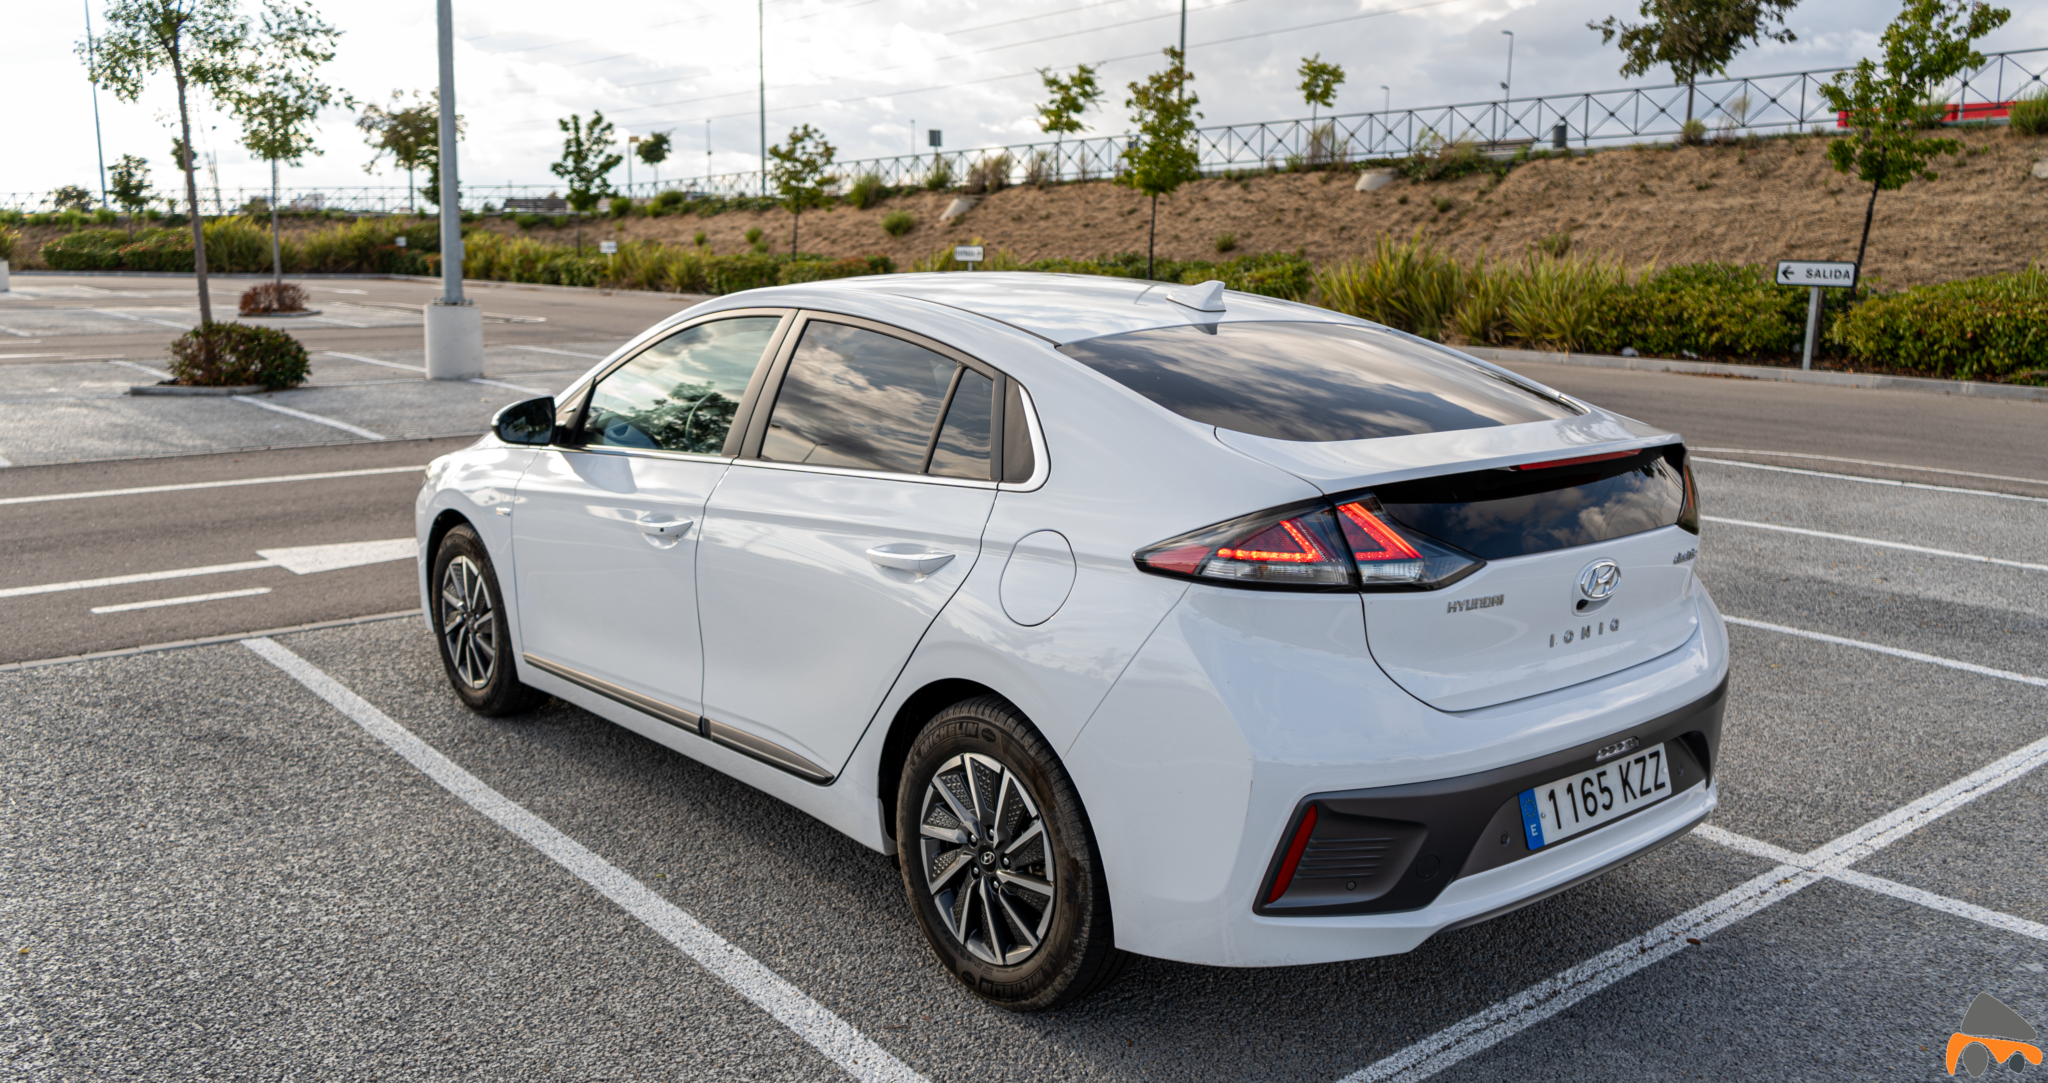 Trasera lateral izquierdo abajo Hyundai Ioniq Electrico - Prueba Hyundai Ioniq EV 2020: Un referente para la movilidad eléctrica